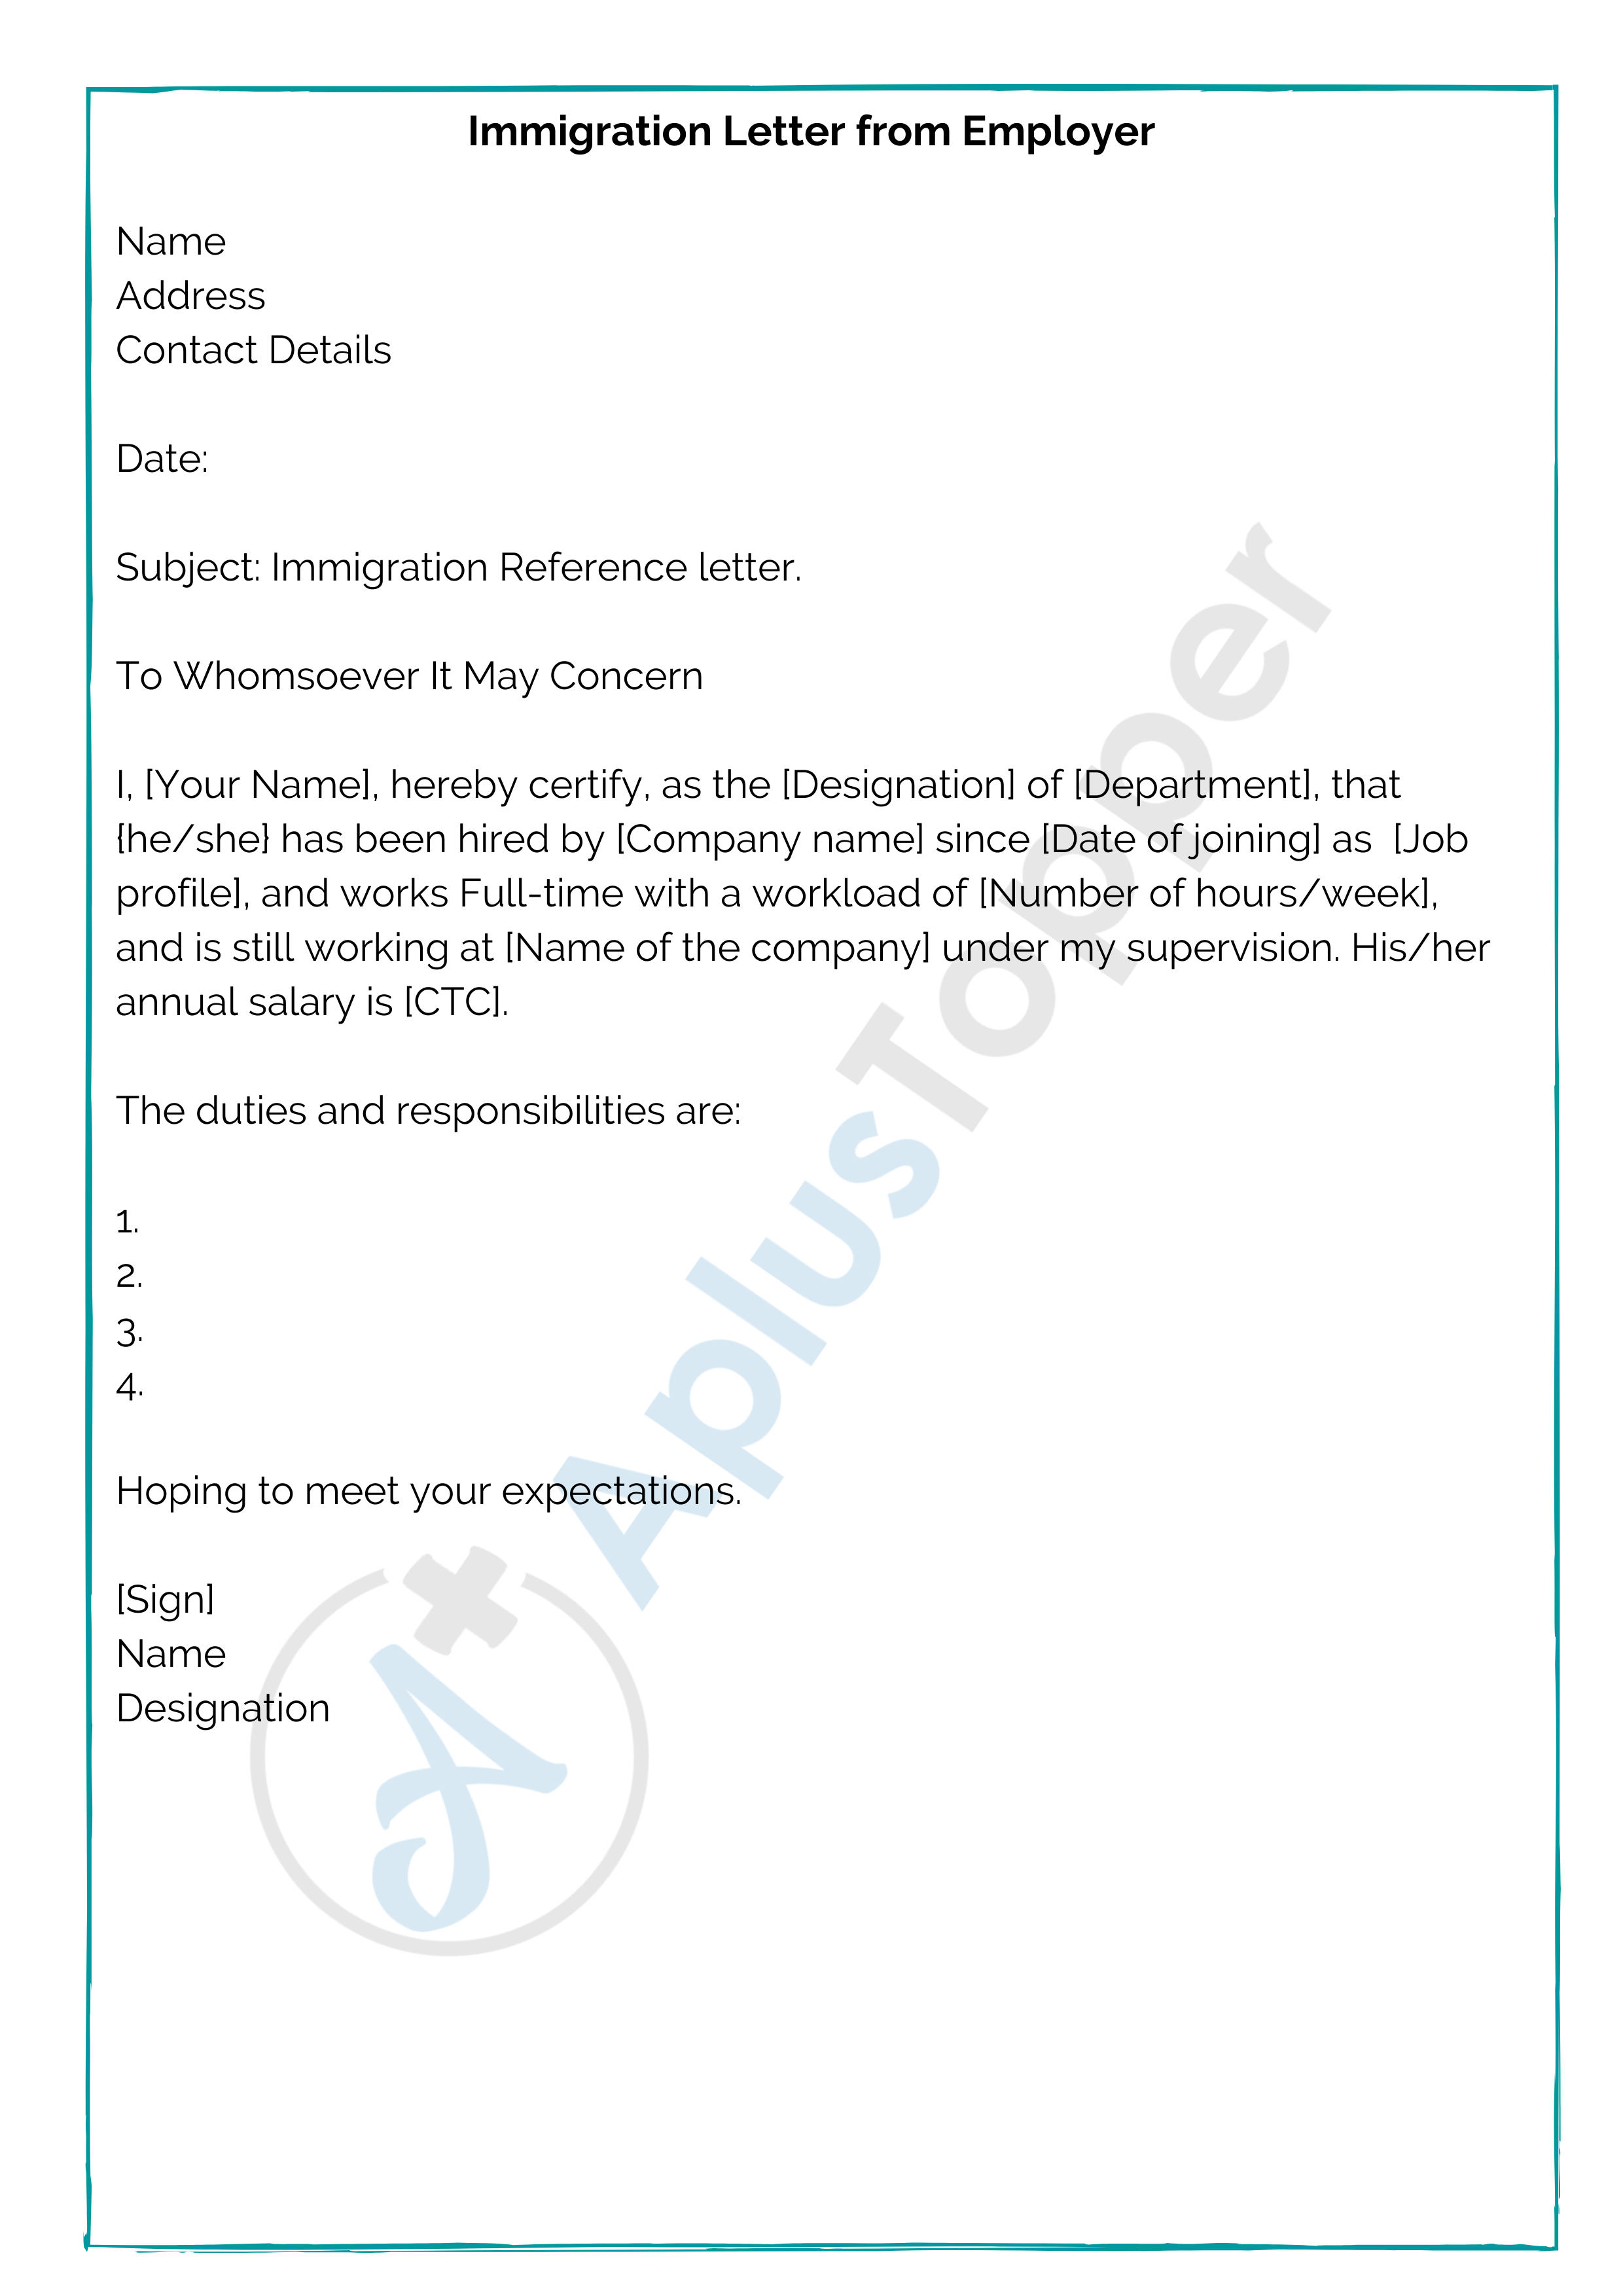 visa application employment reference letter for australian immigration